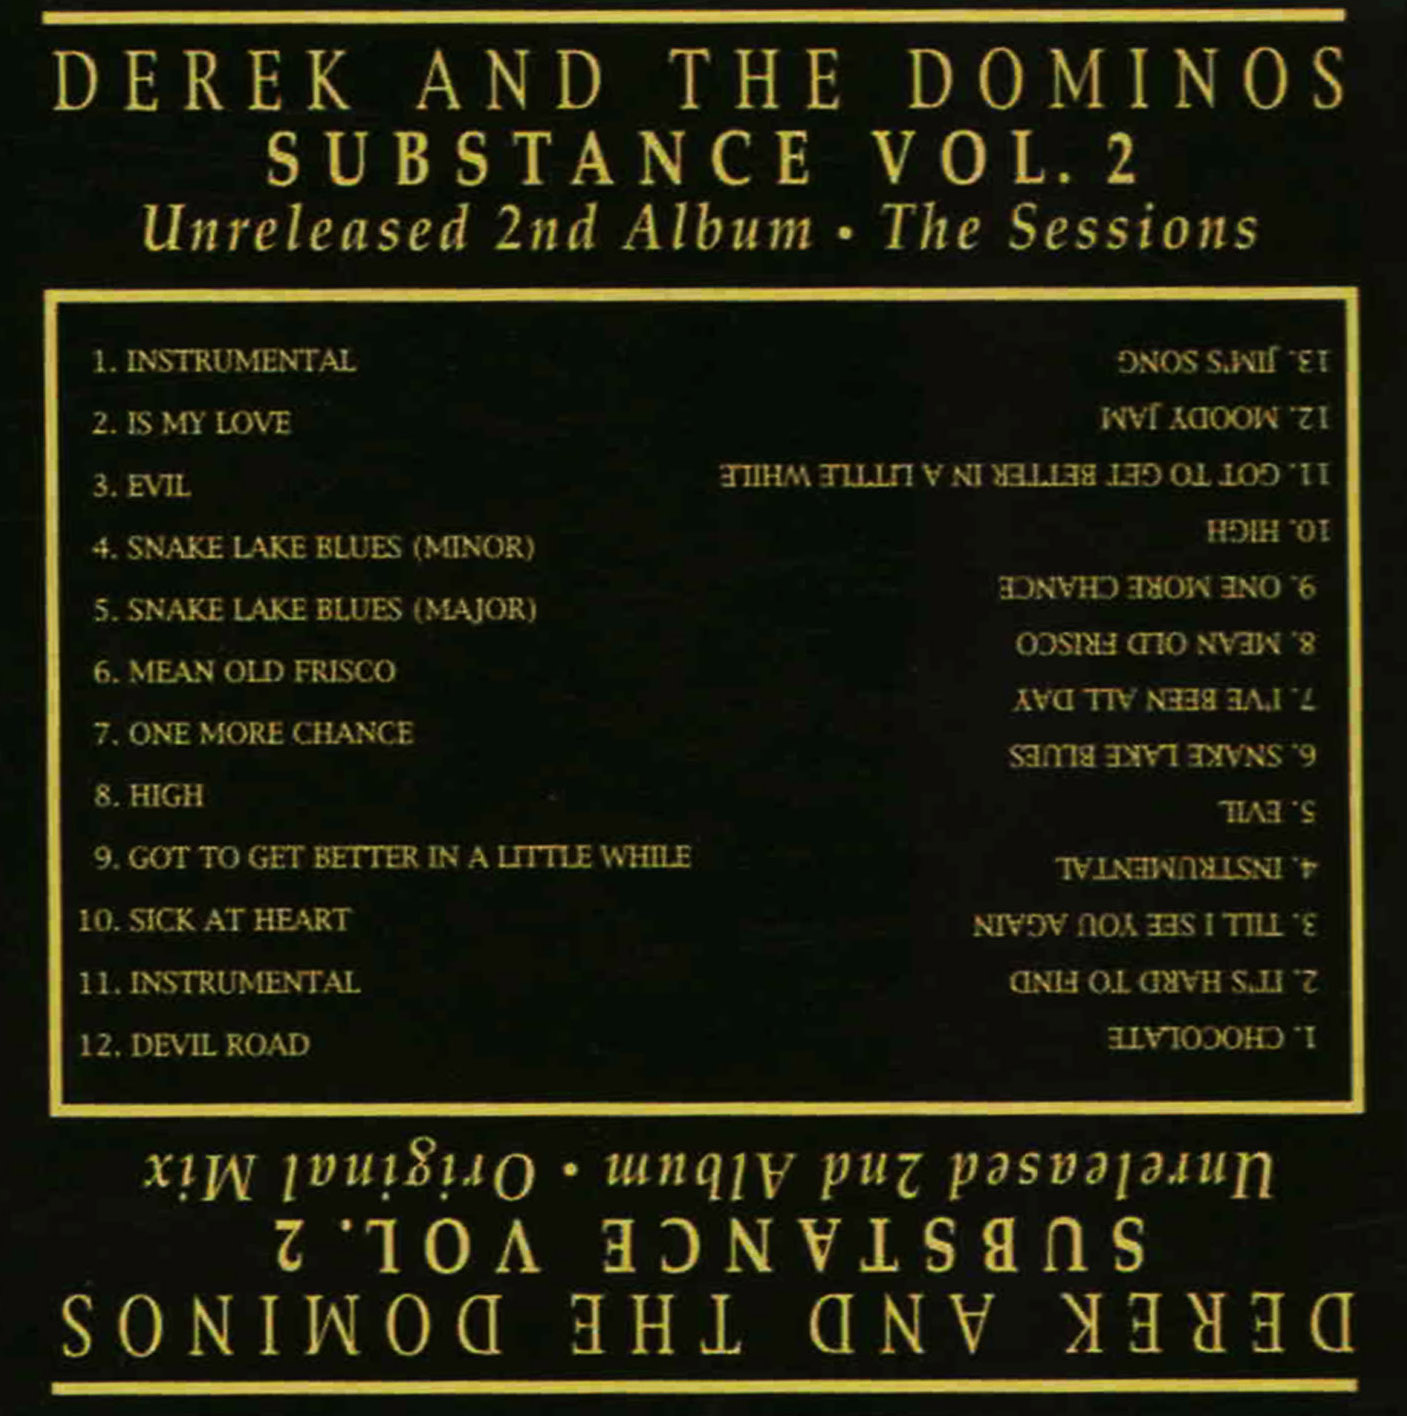 Derek and the Dominos – Substance Vol. 2 – Jerry Scott